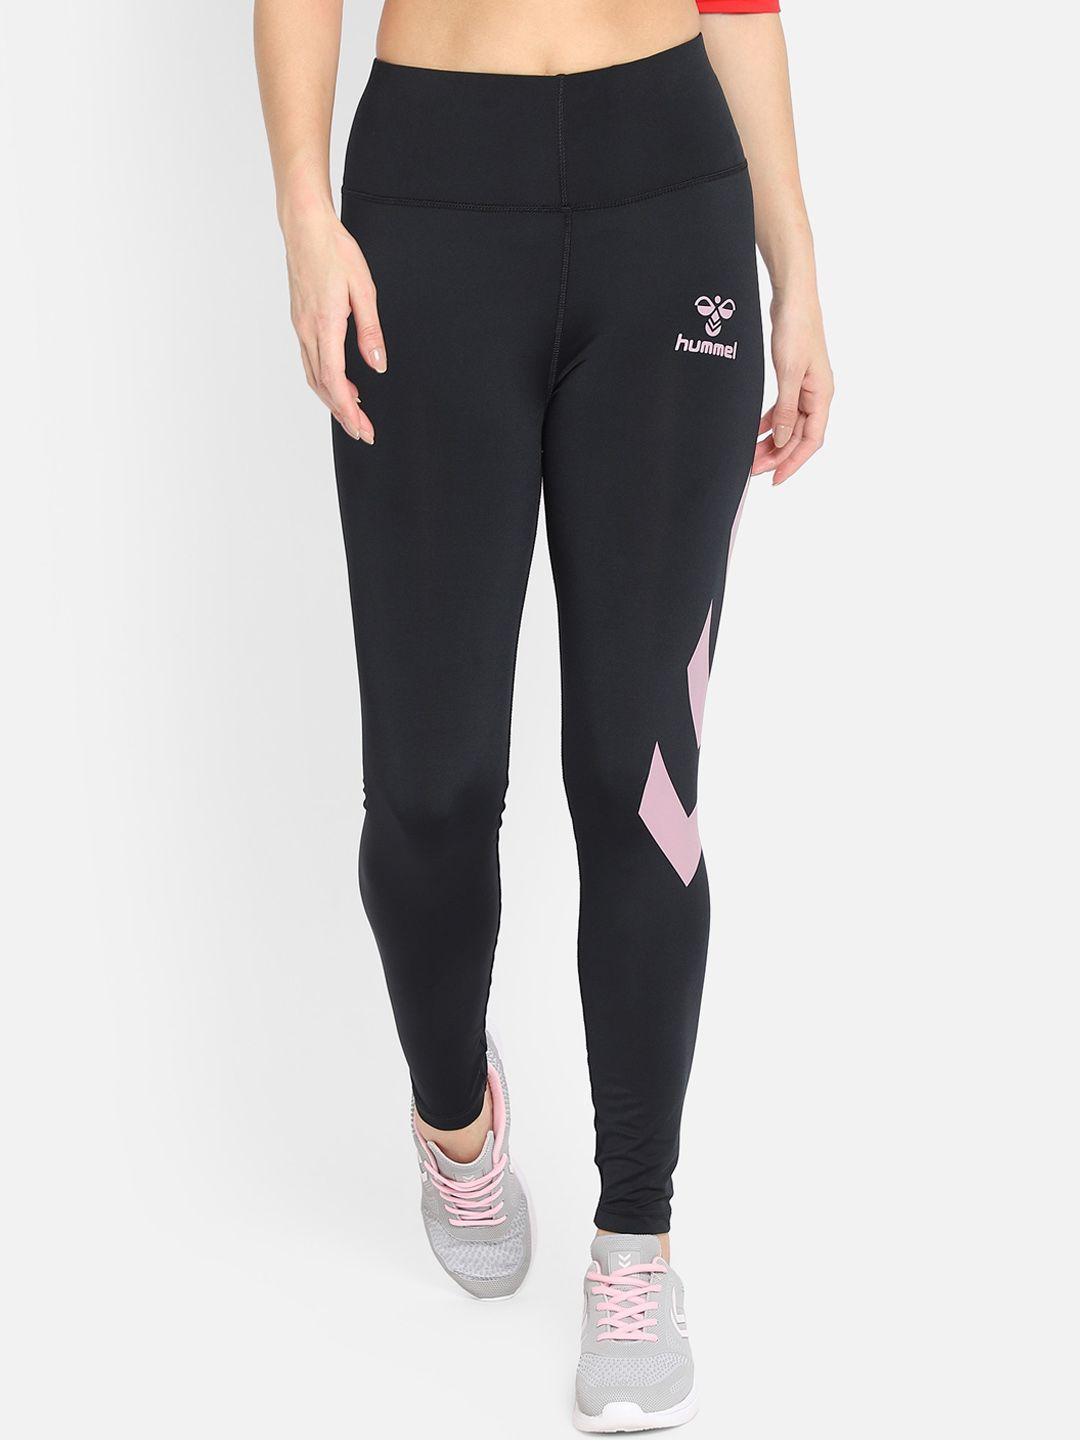 hummel women black & pink printed tights